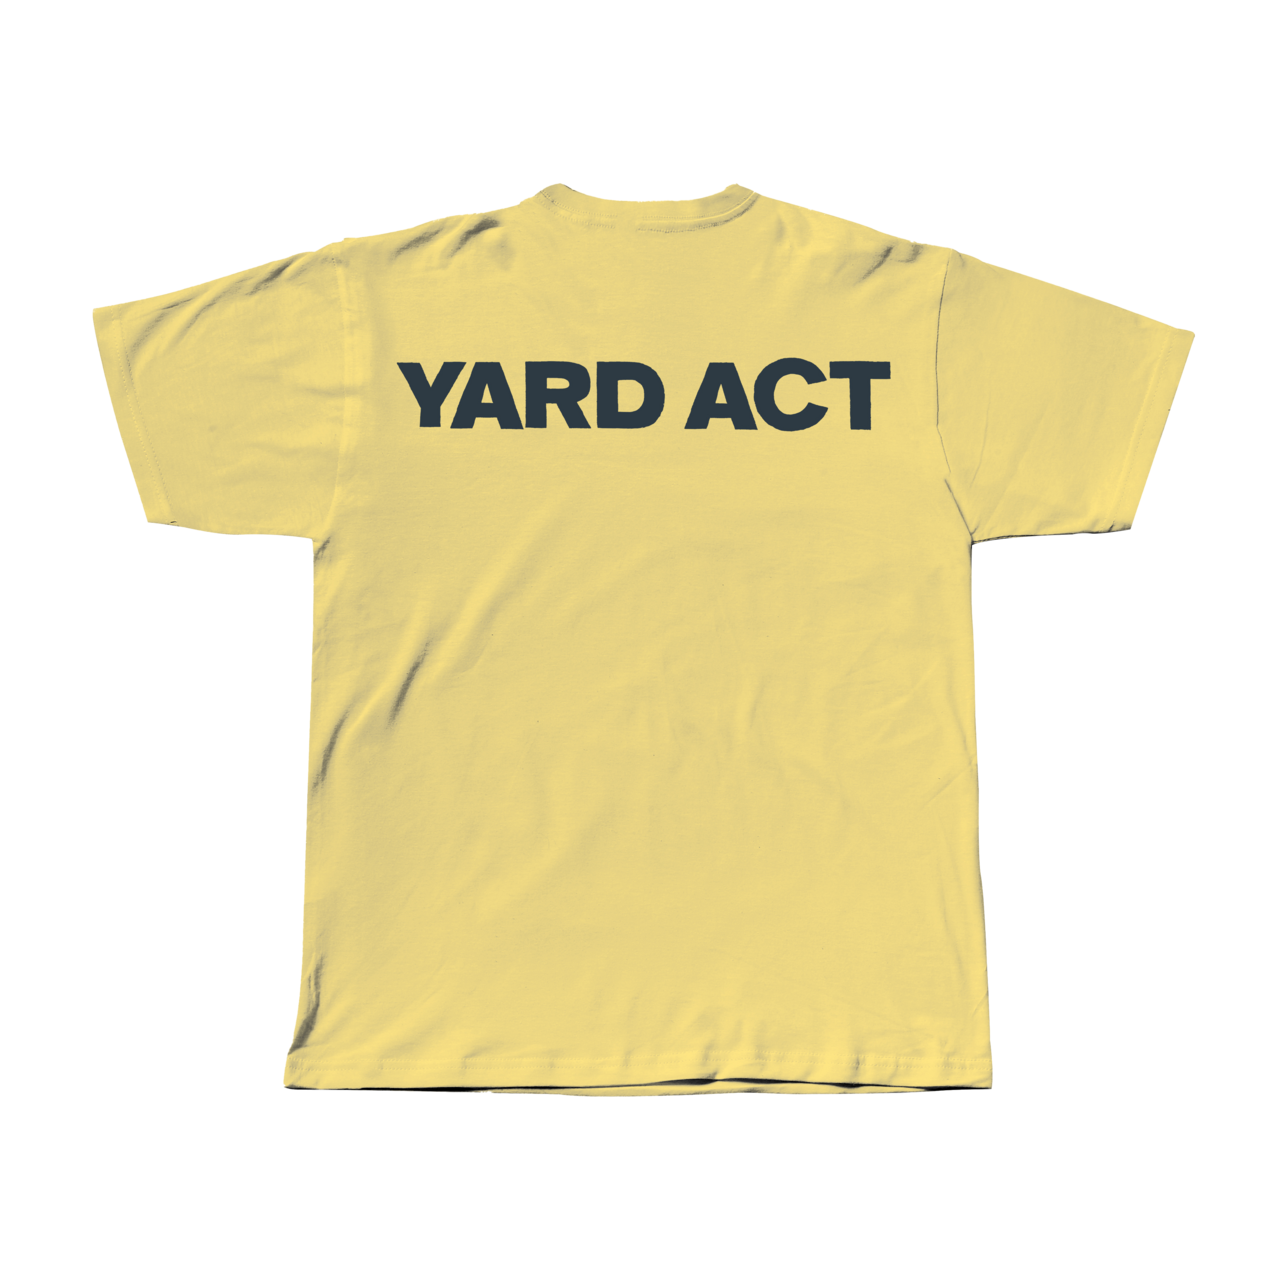 Yard Act - Speech Bubble Burning Man T-Shirt Yellow / Blue